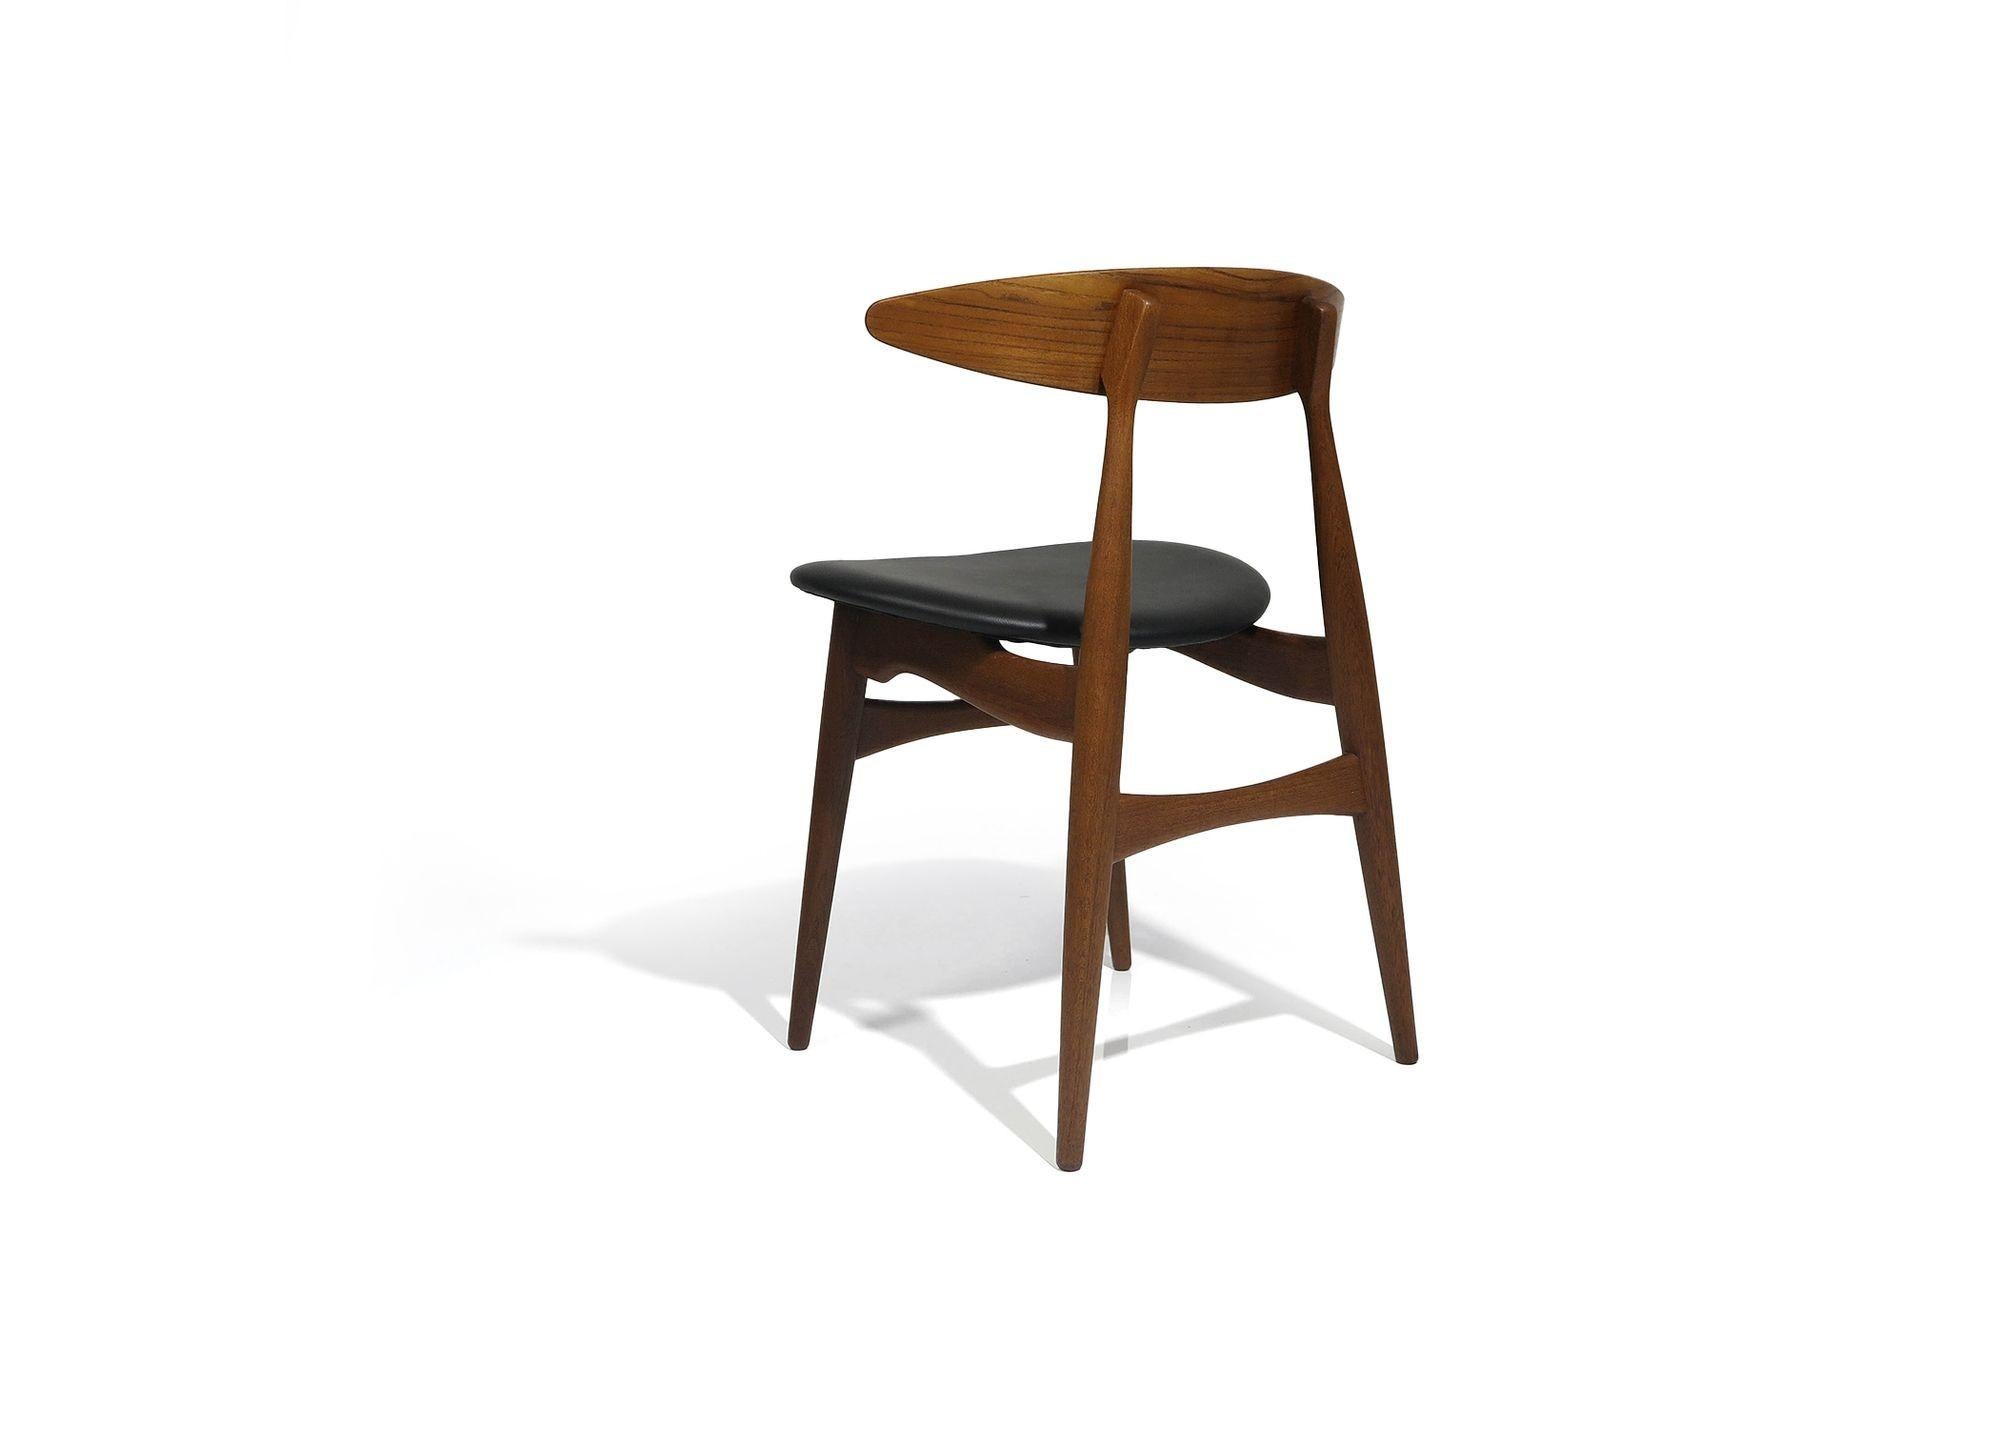 20th Century Hans J. Wegner Danish Teak Dining Chairs CH 33 for Carl Hansen For Sale